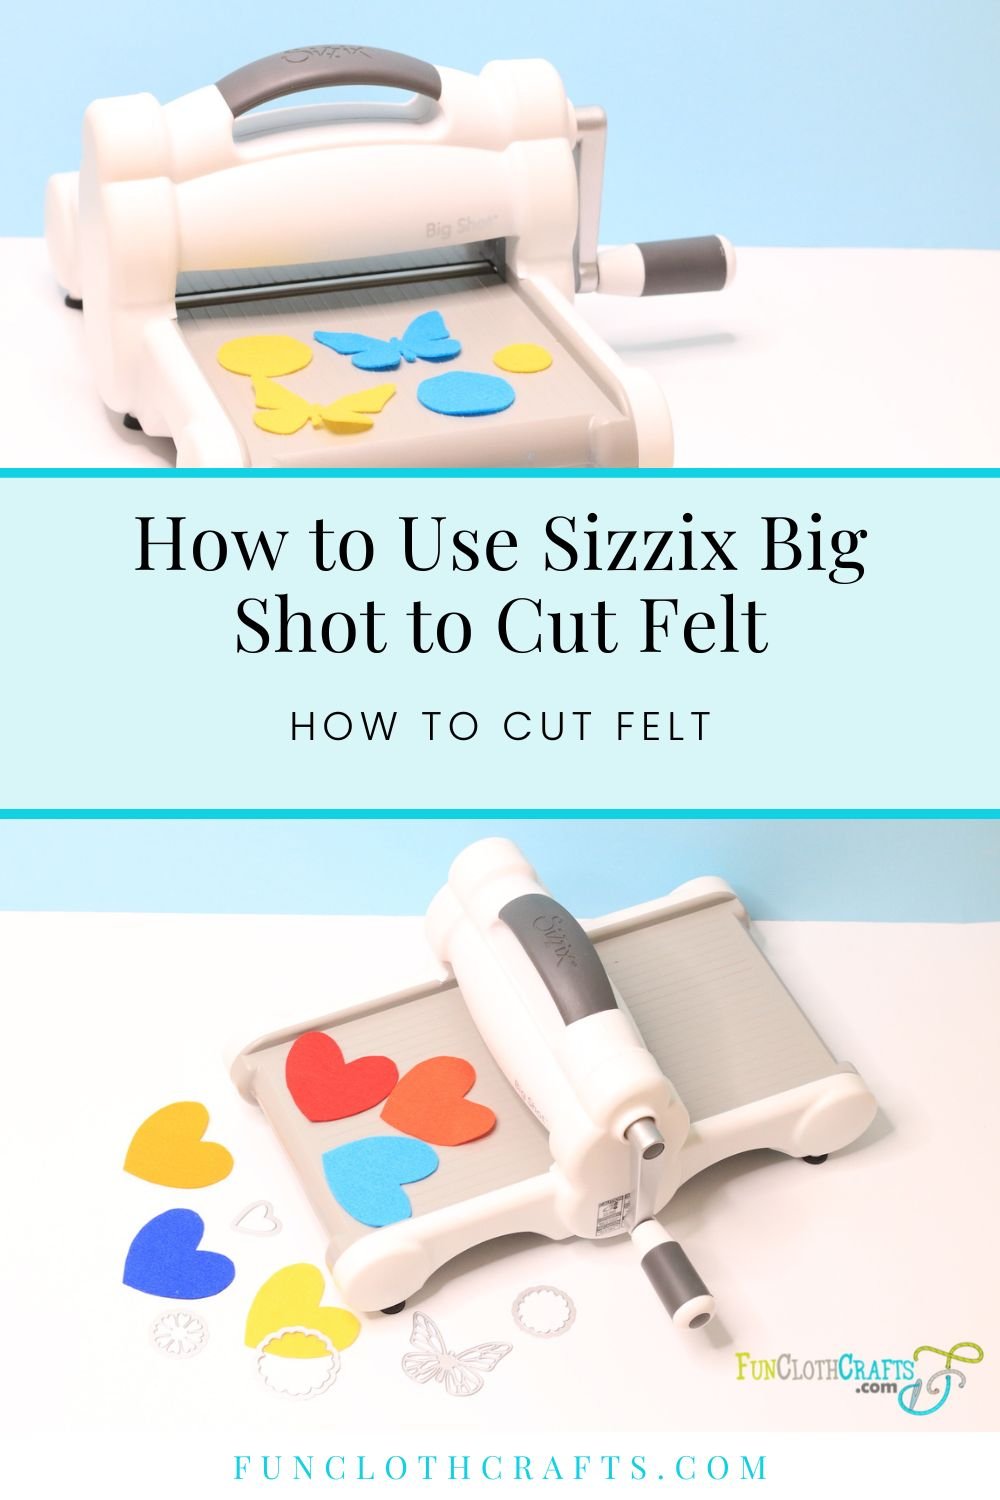 Sizzix Big Shot Tutorial - Learn How to Cut Felt Using Sizzix